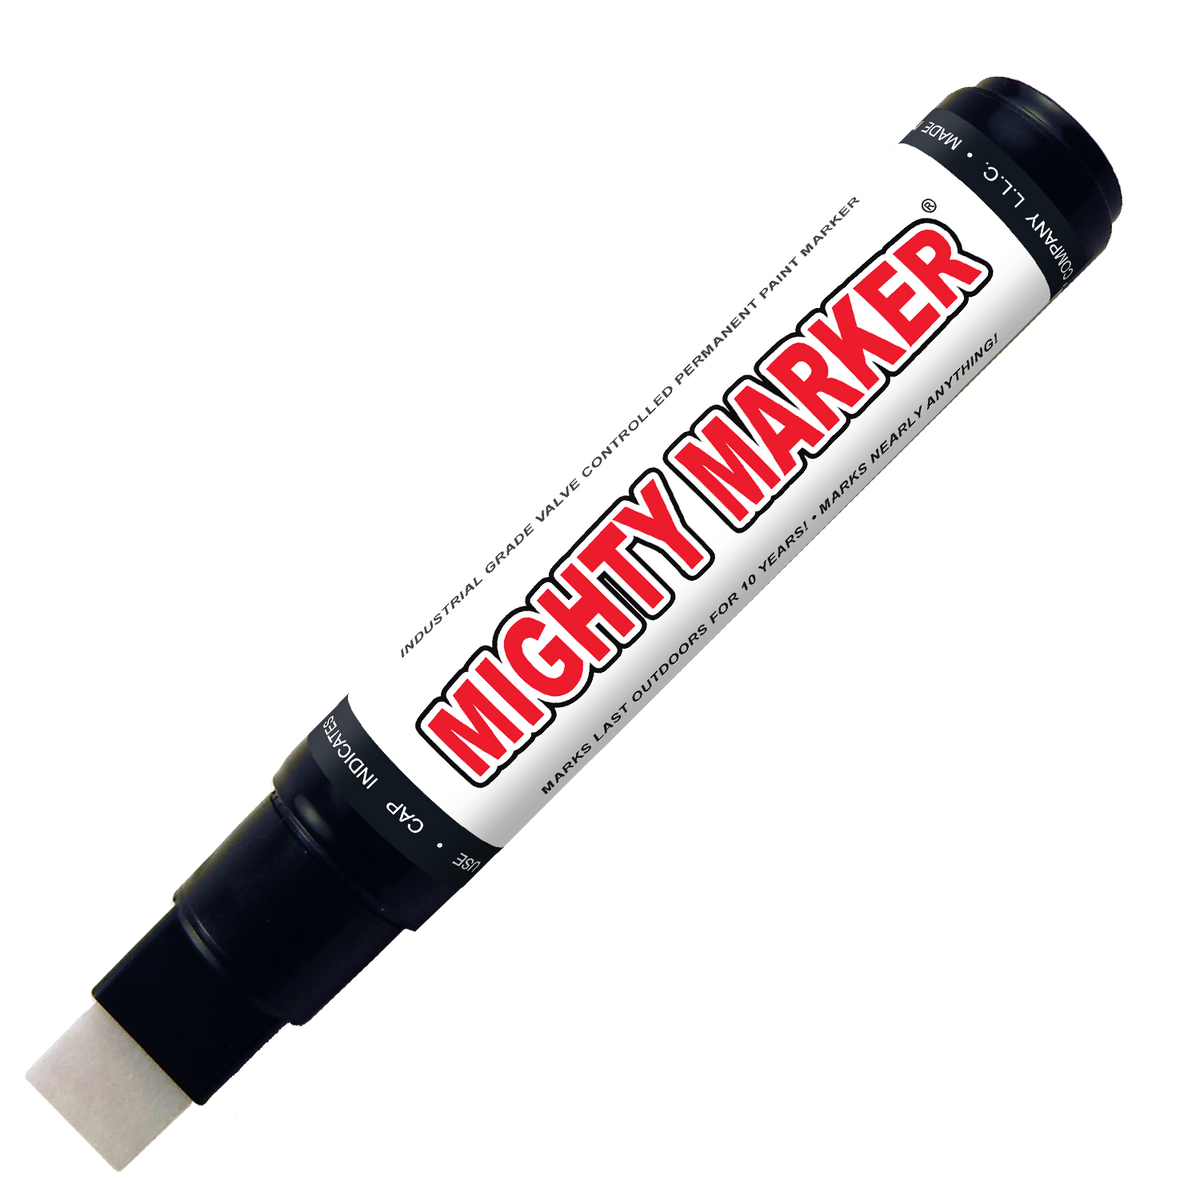 Extra Long Nib Marker Pens, Quick Drying, Waterproof, Oil-based